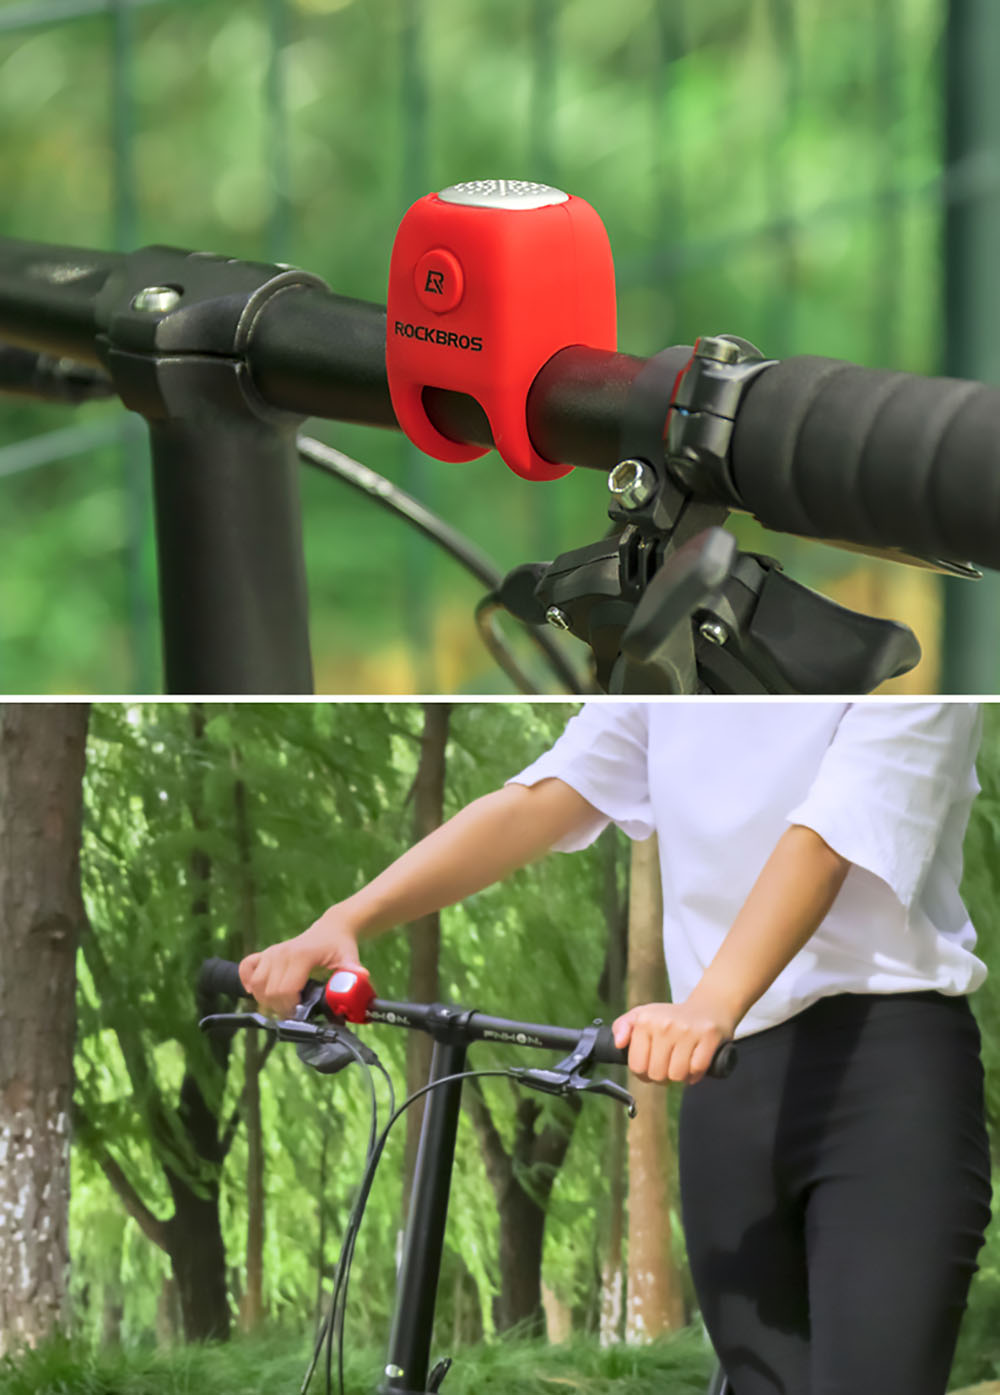 ROCKBROS Electric Cycling Bell 90 dB Horn Rainproof Bicycle Handlebar Silica Gel Shell Ring Bike Bell - Red